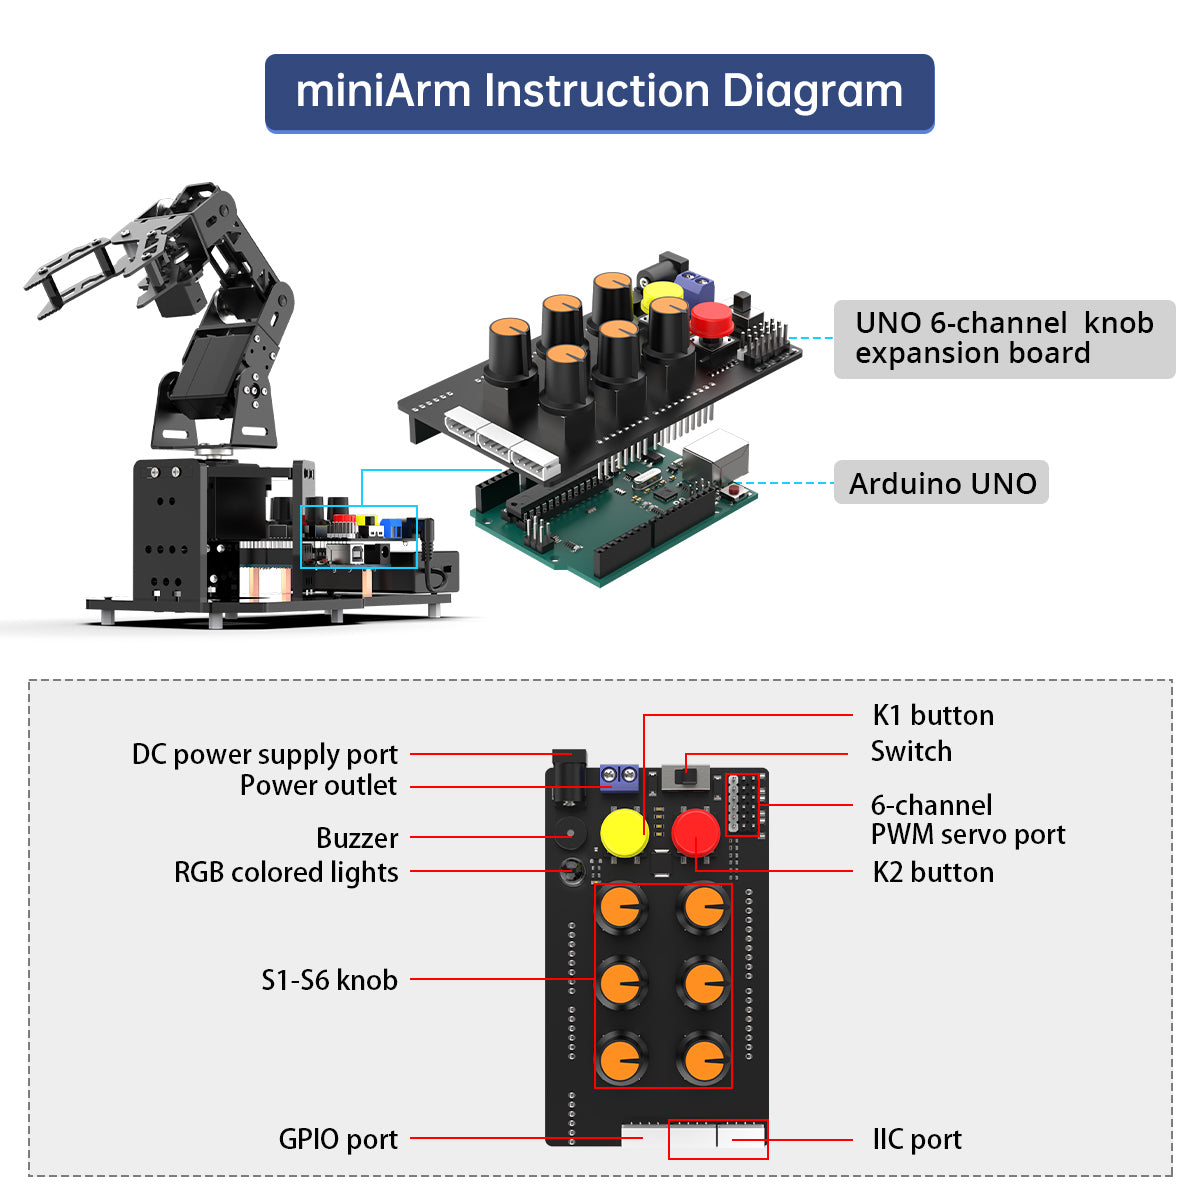 miniArm Open Source AI Robotic Arm Support Sensor Expansion, Arduino Programming